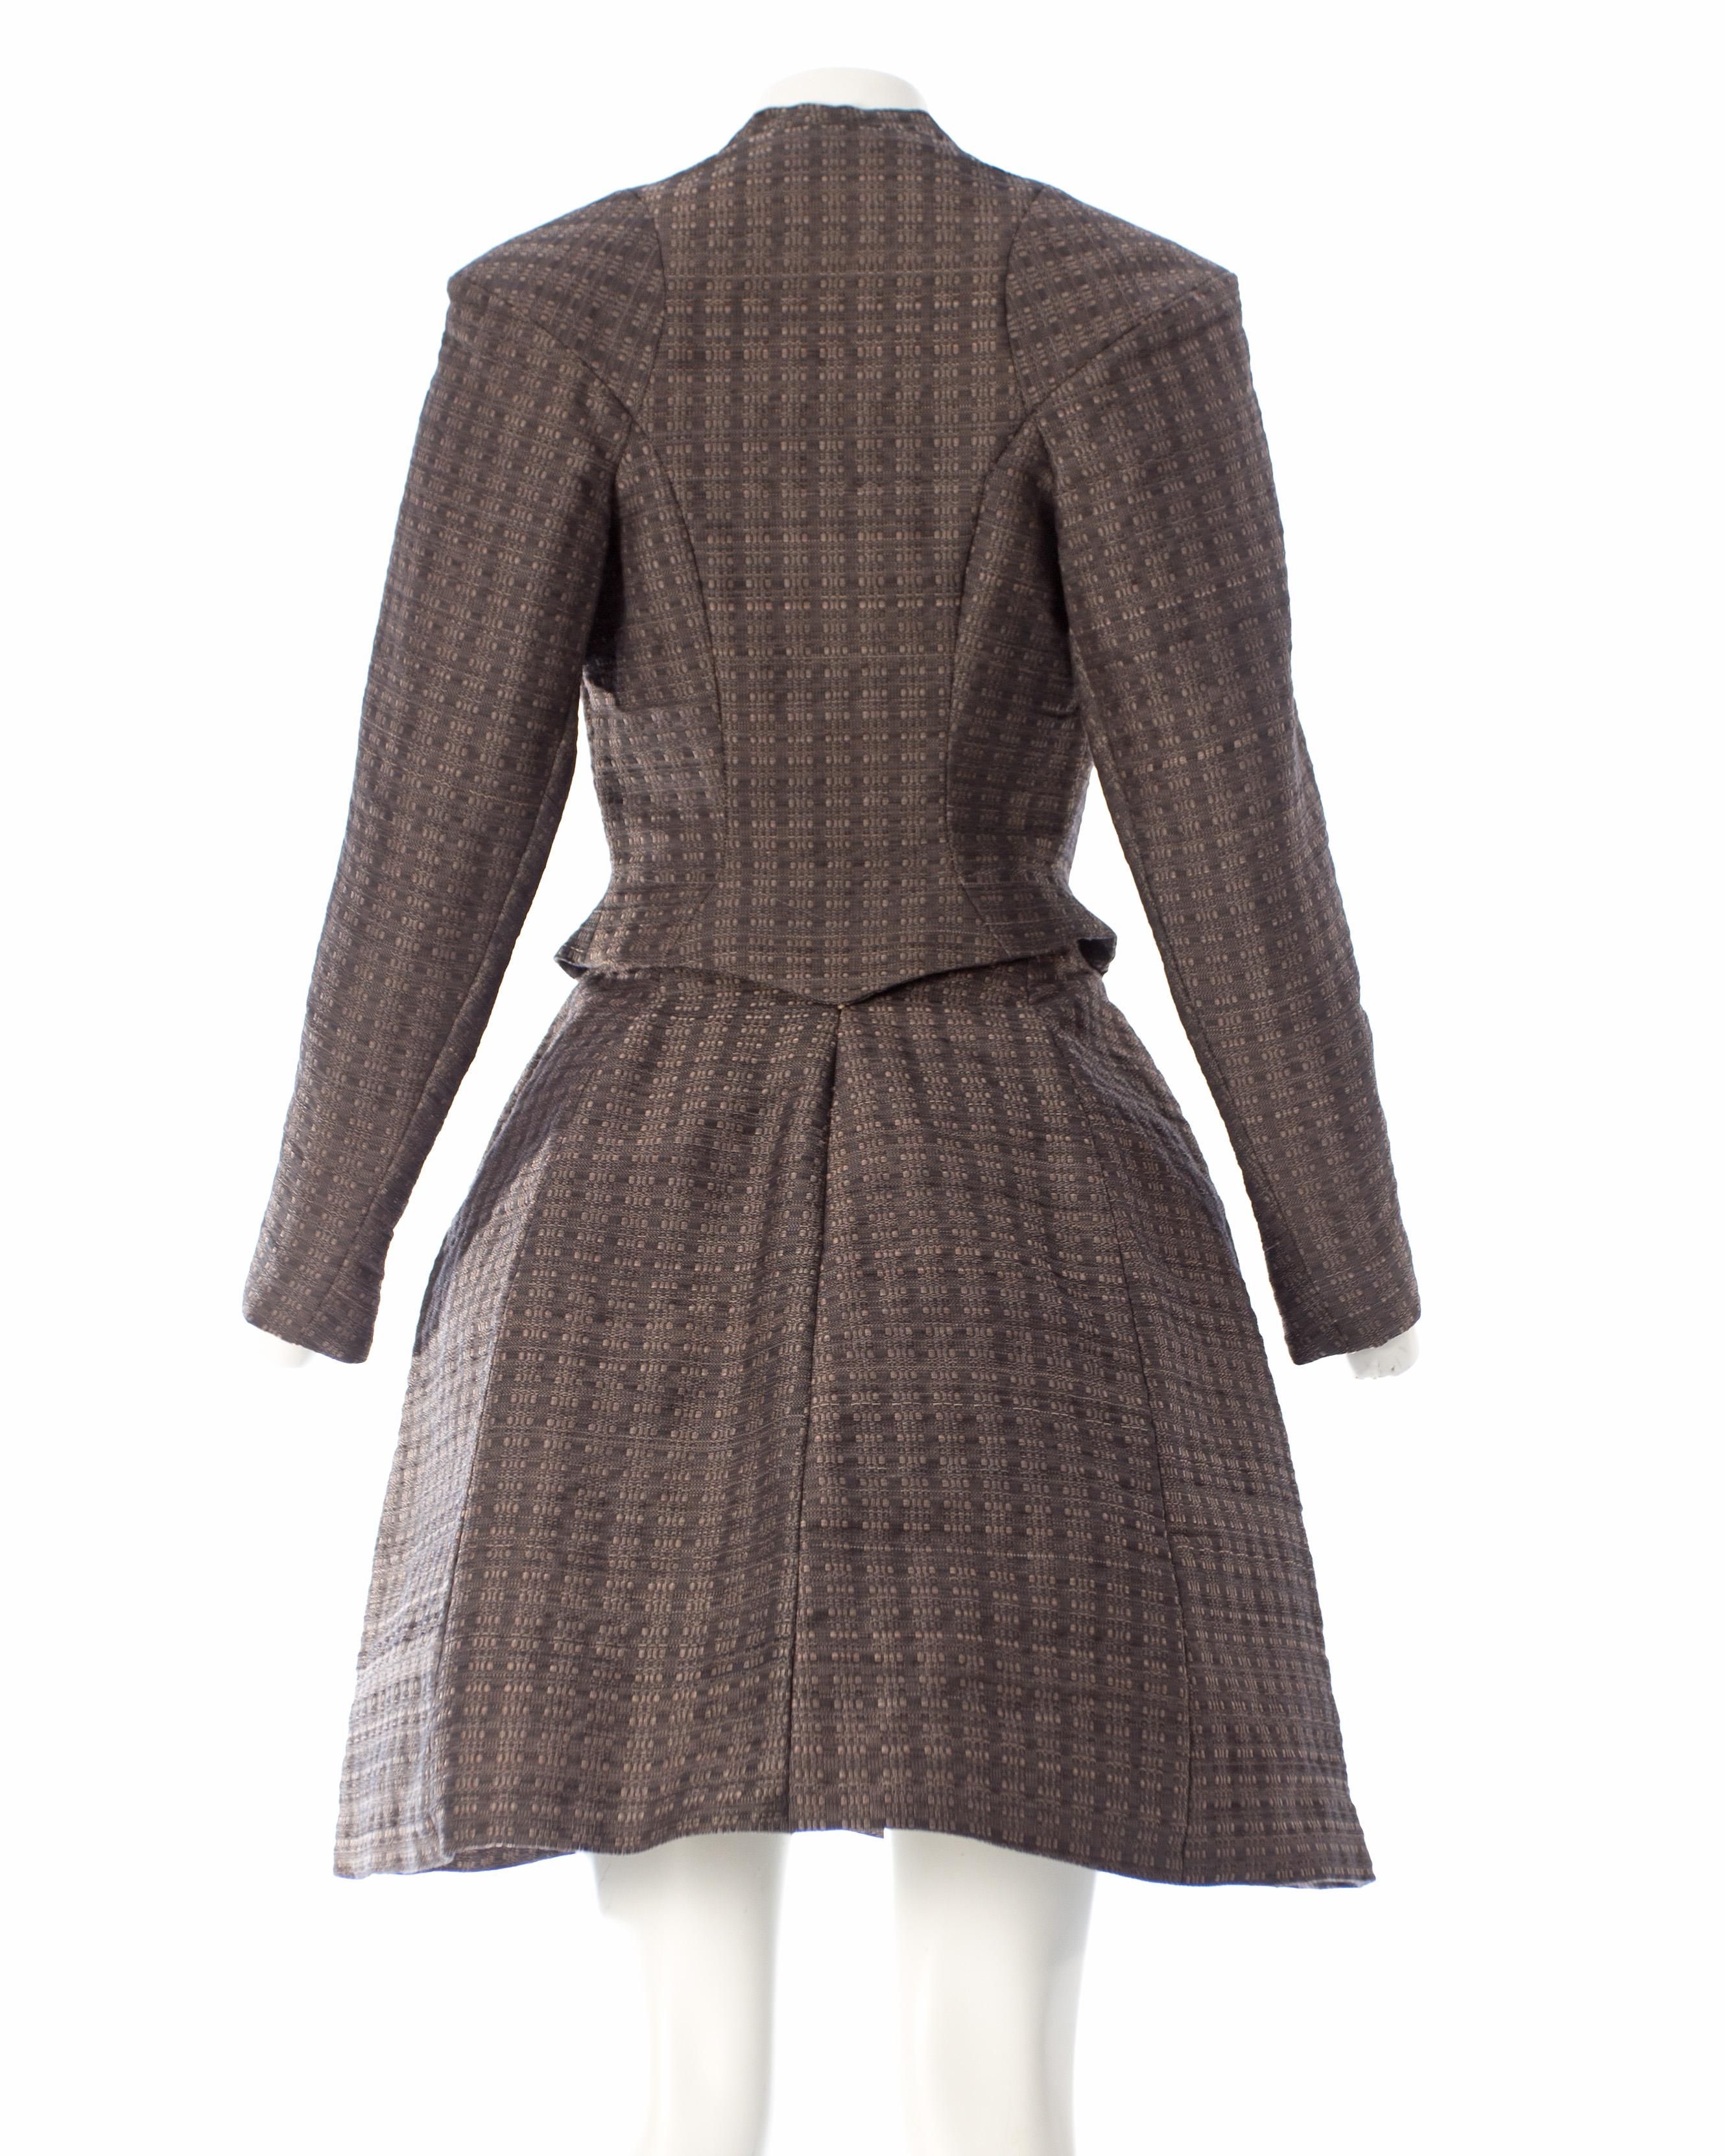 Vivienne Westwood mauve brocade structured skirt suit, fw 1997  2